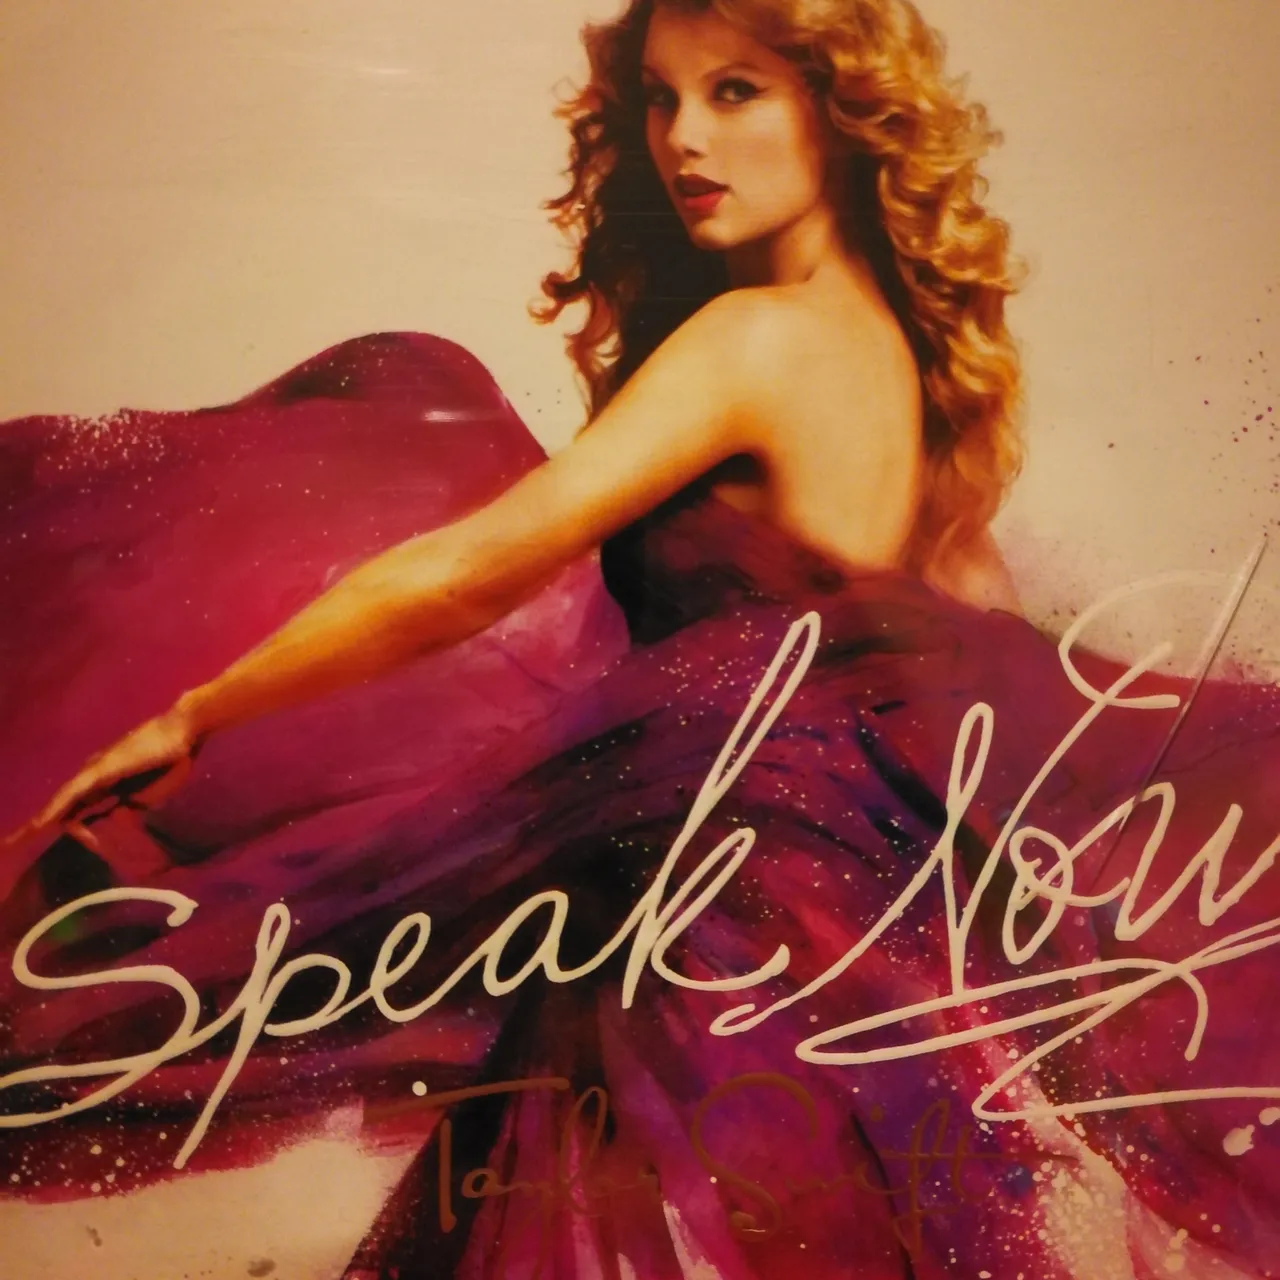 Speak Now Album by Taylor Swift photo 6